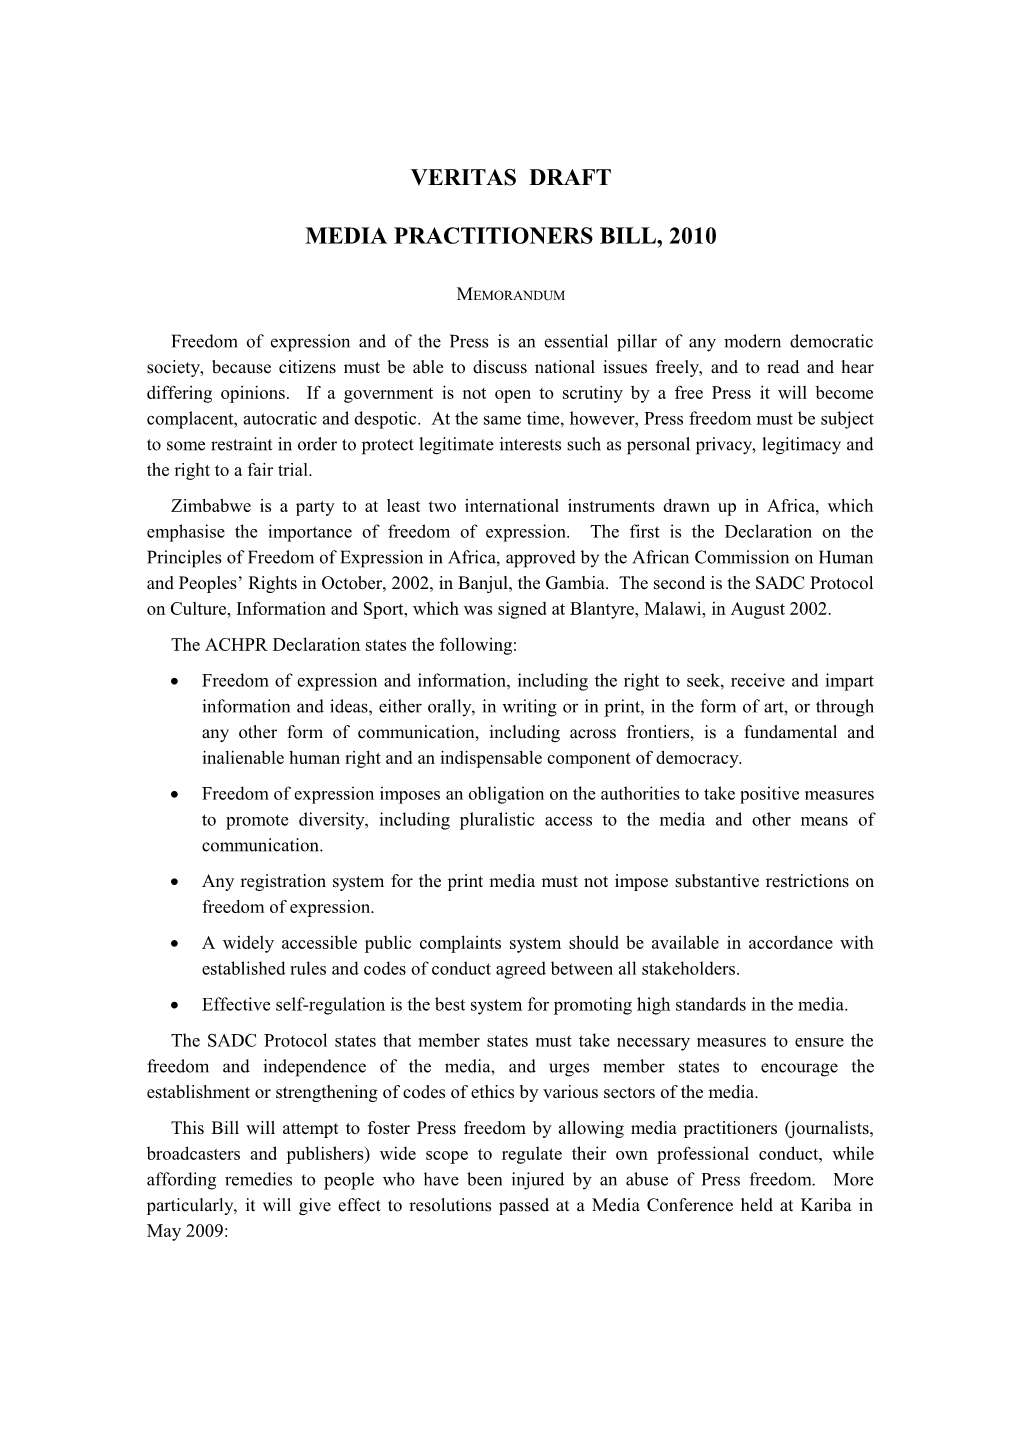 Media Practitioners Bill, 2009